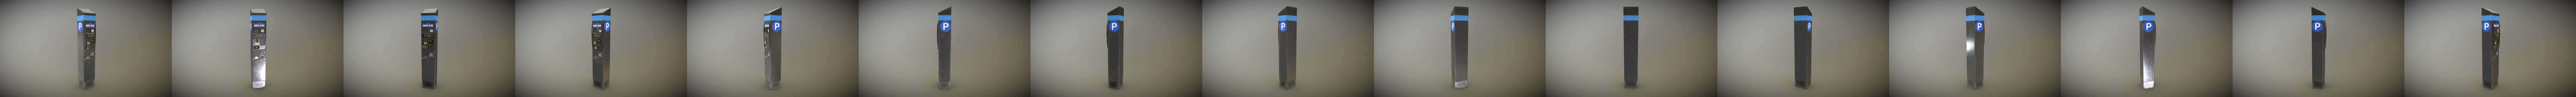 Parking meter / Parkuhr - Buy Royalty Free 3D model by VIS-All-3D